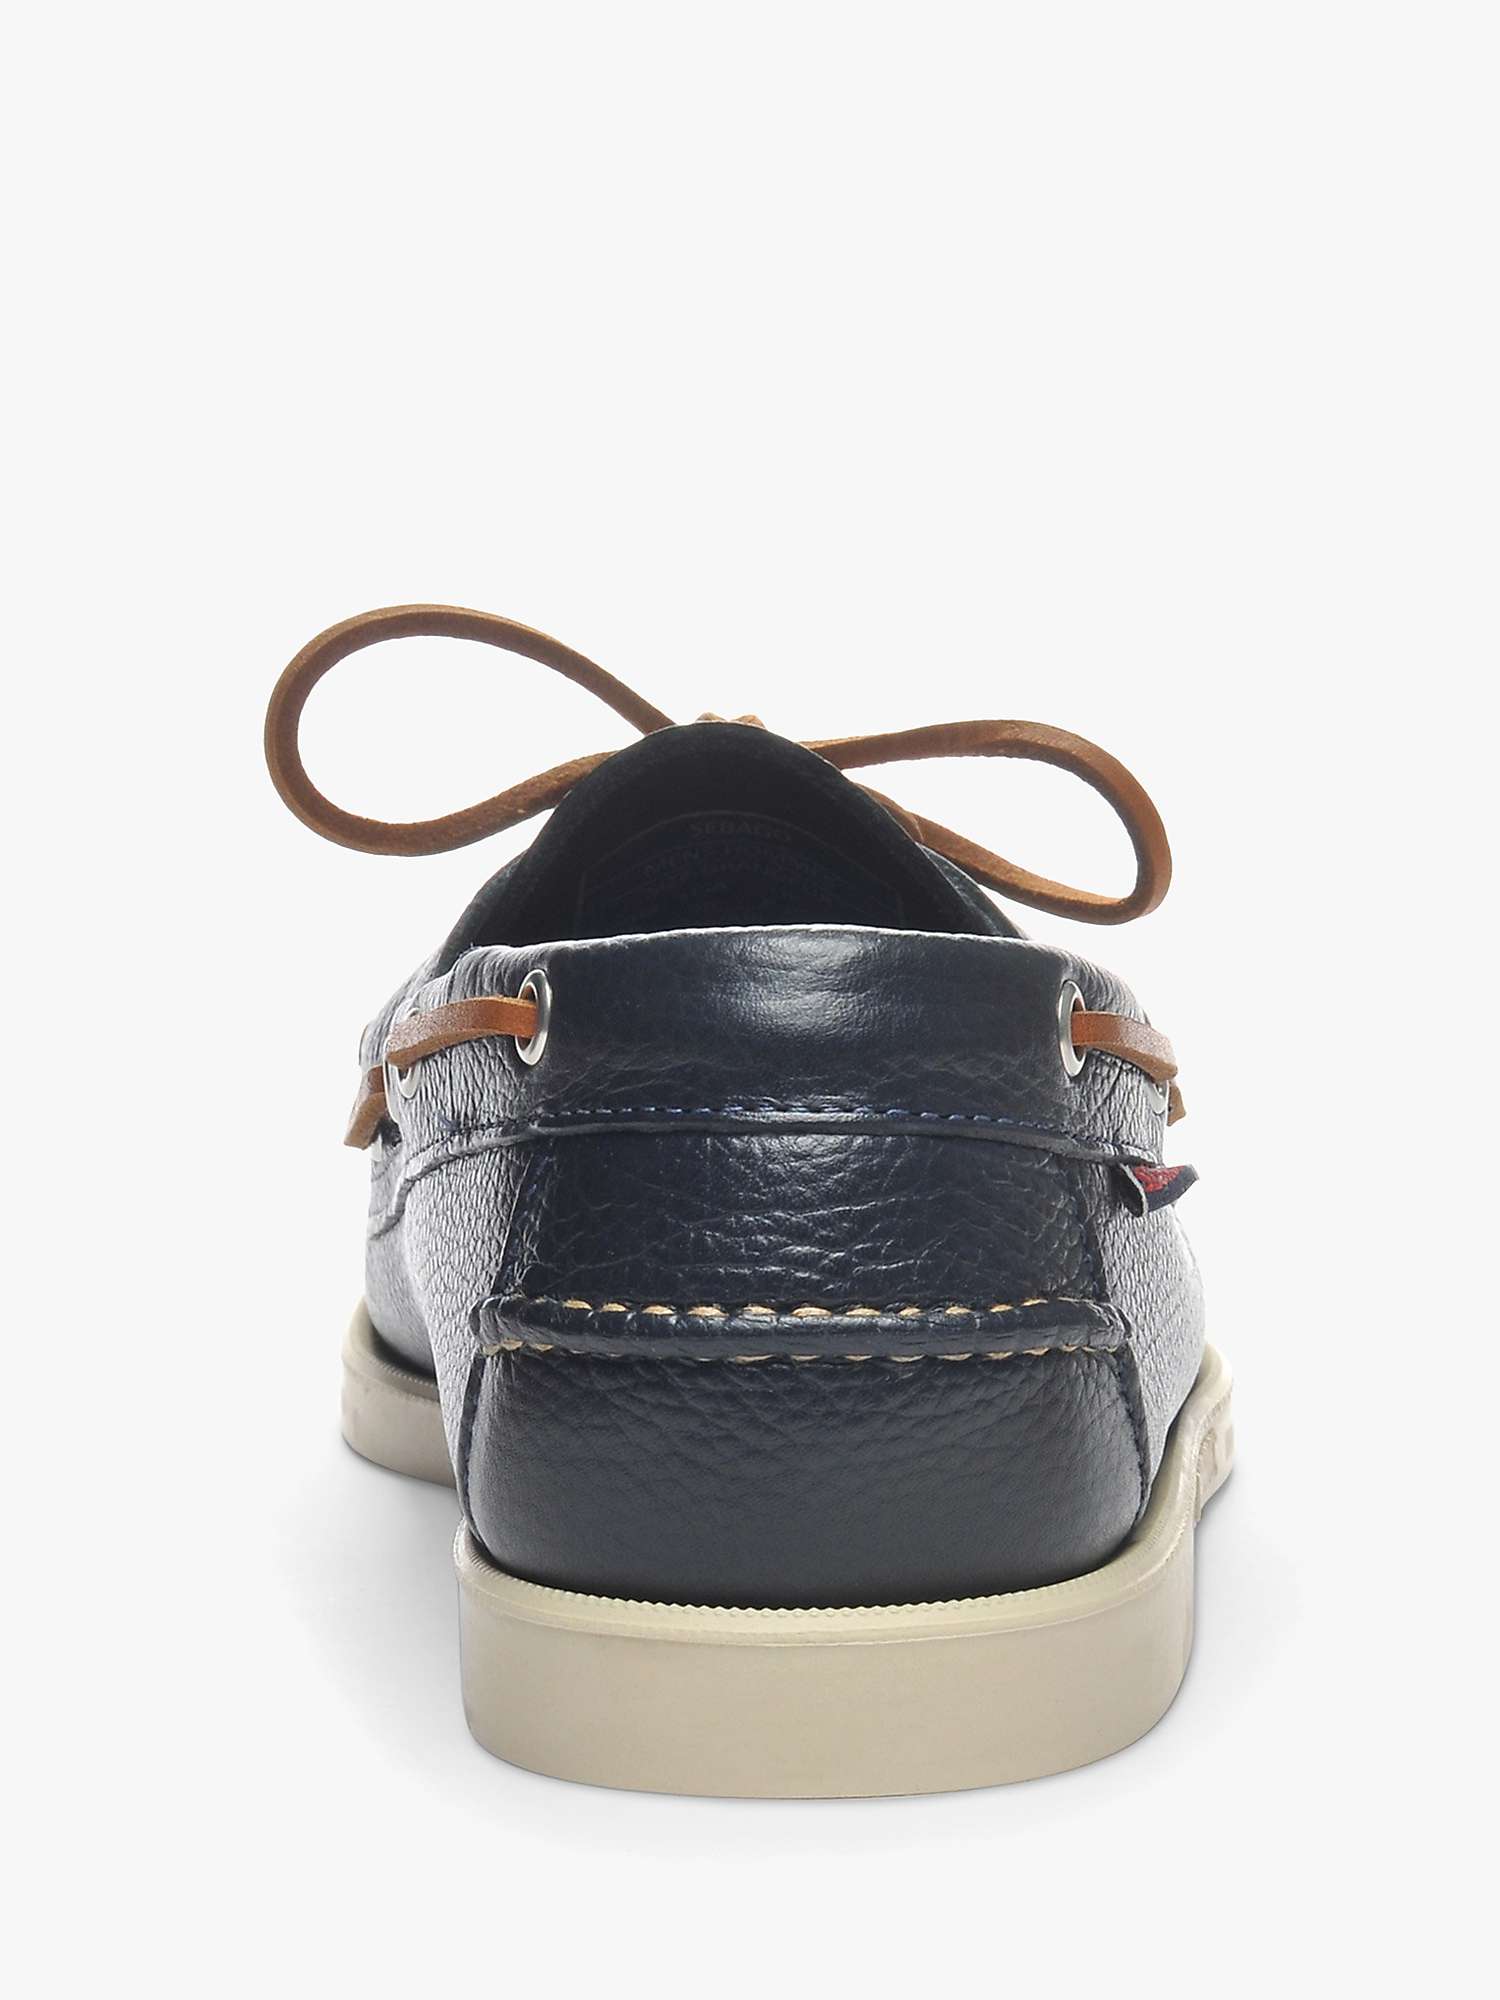 Sebago Portland Martellato Leather Boat Shoes at John Lewis & Partners